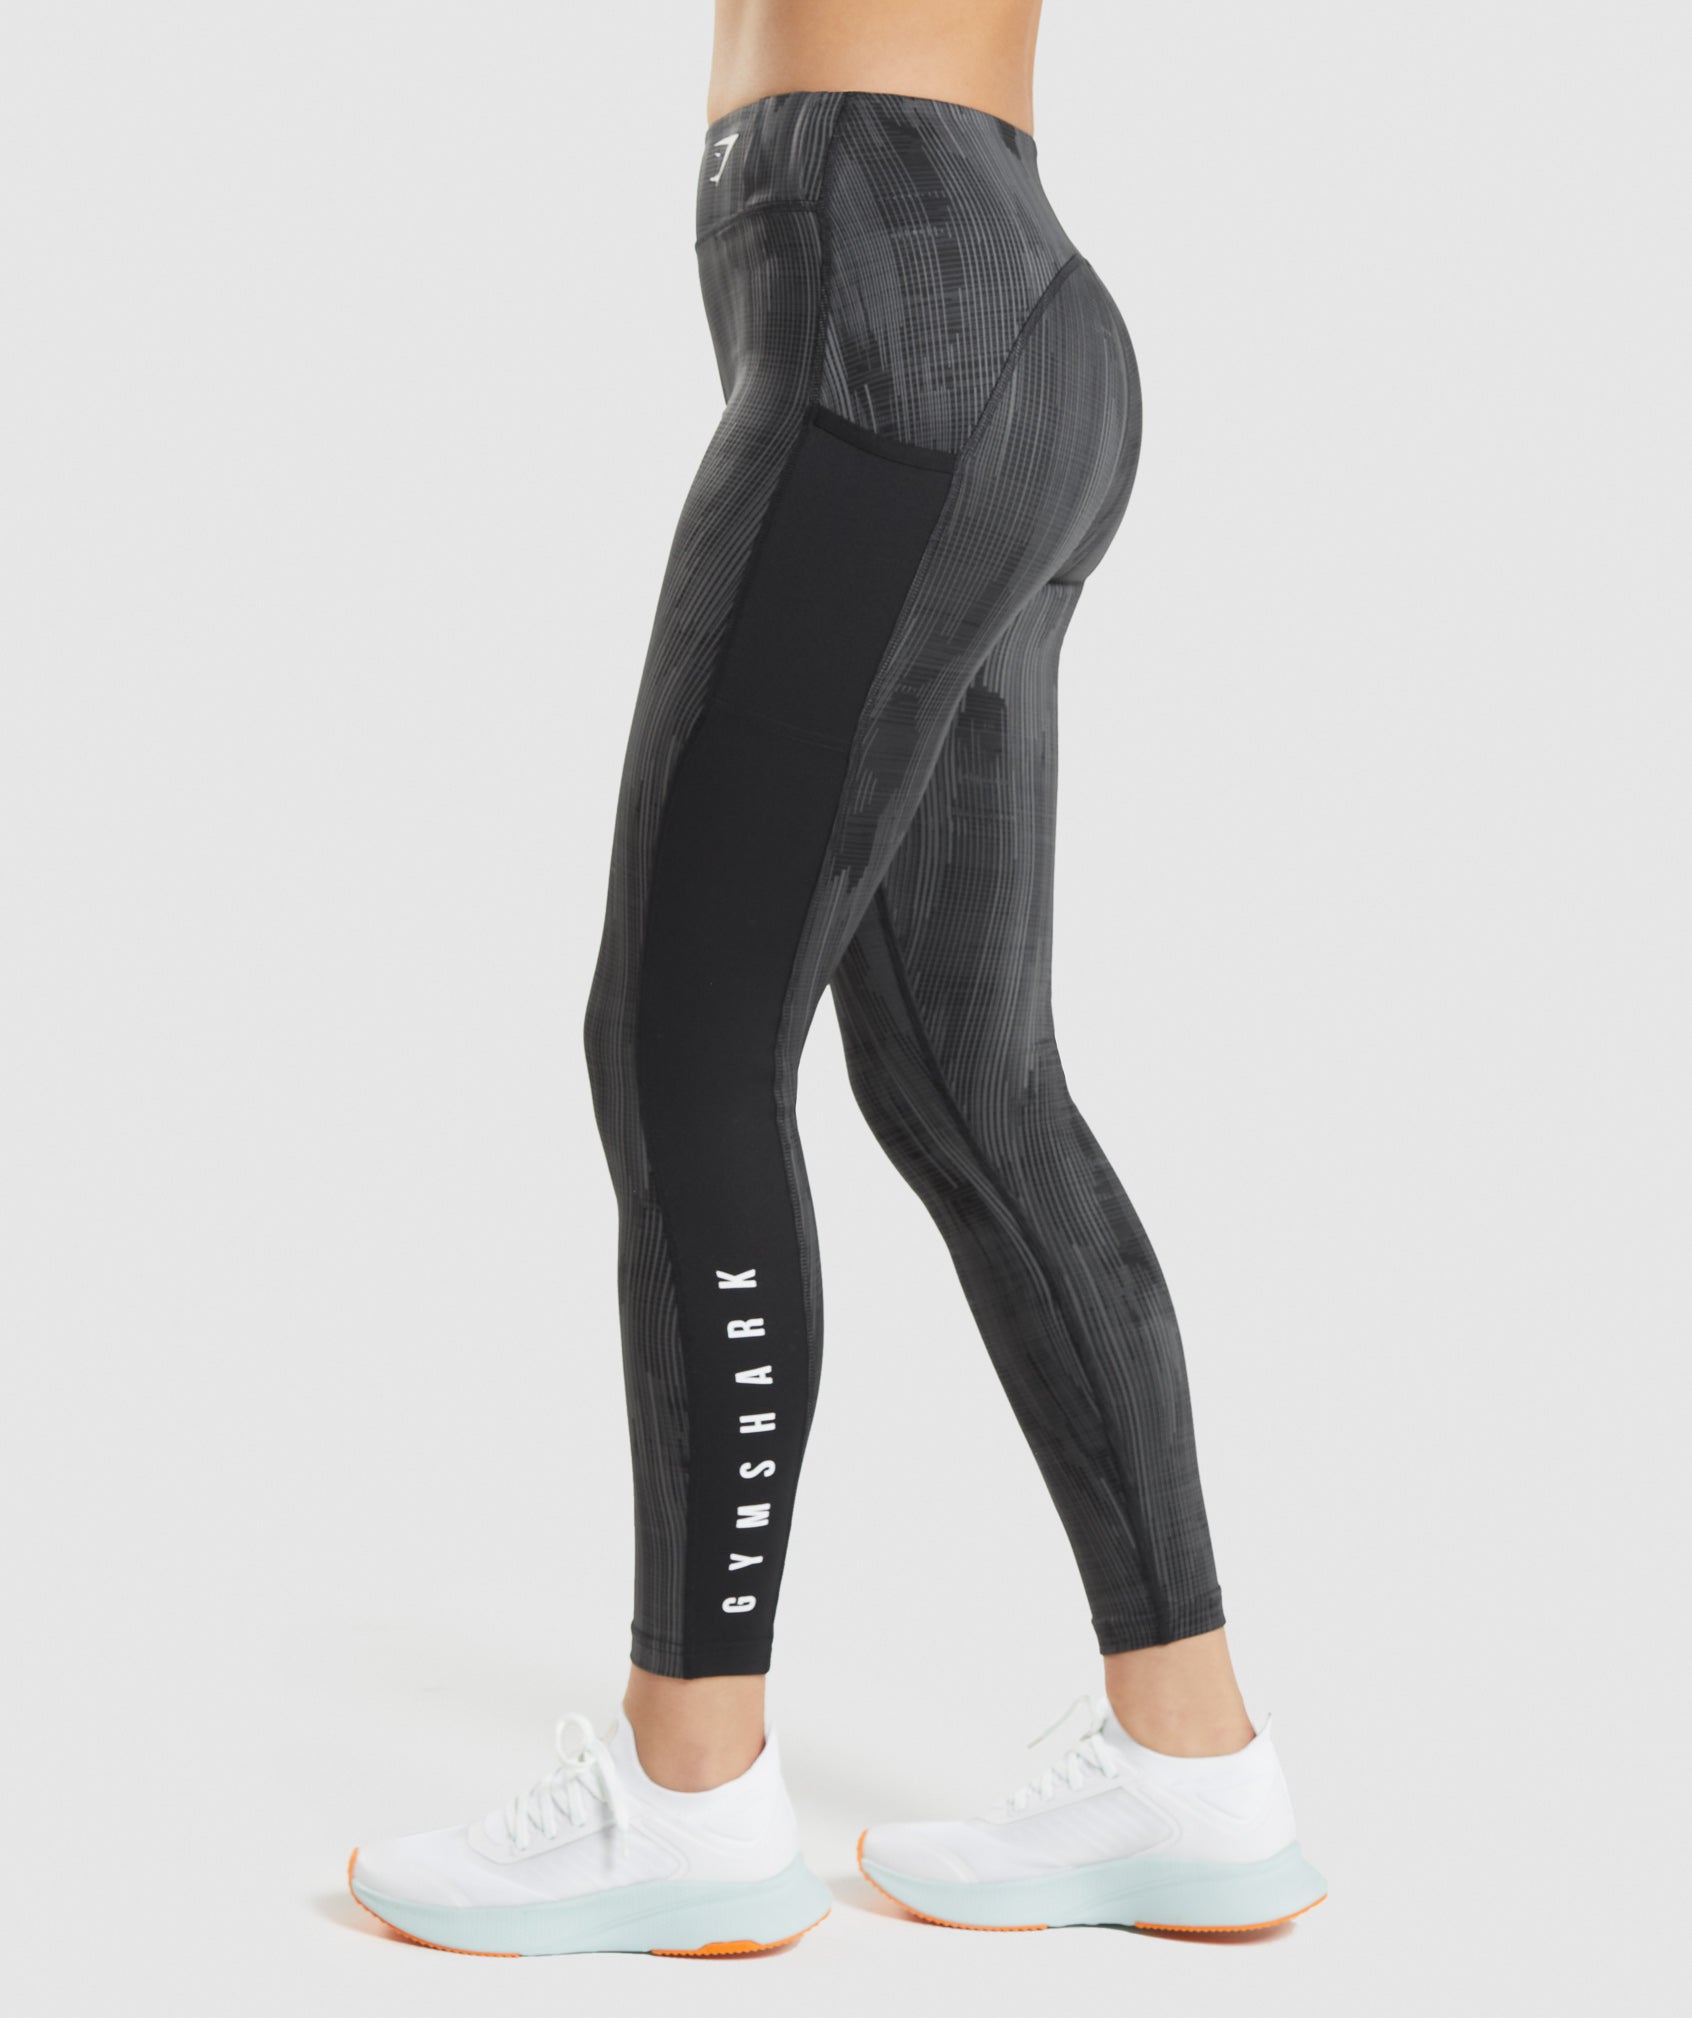 Gymshark Speed Leggings Black Size M - $40 (11% Off Retail) - From